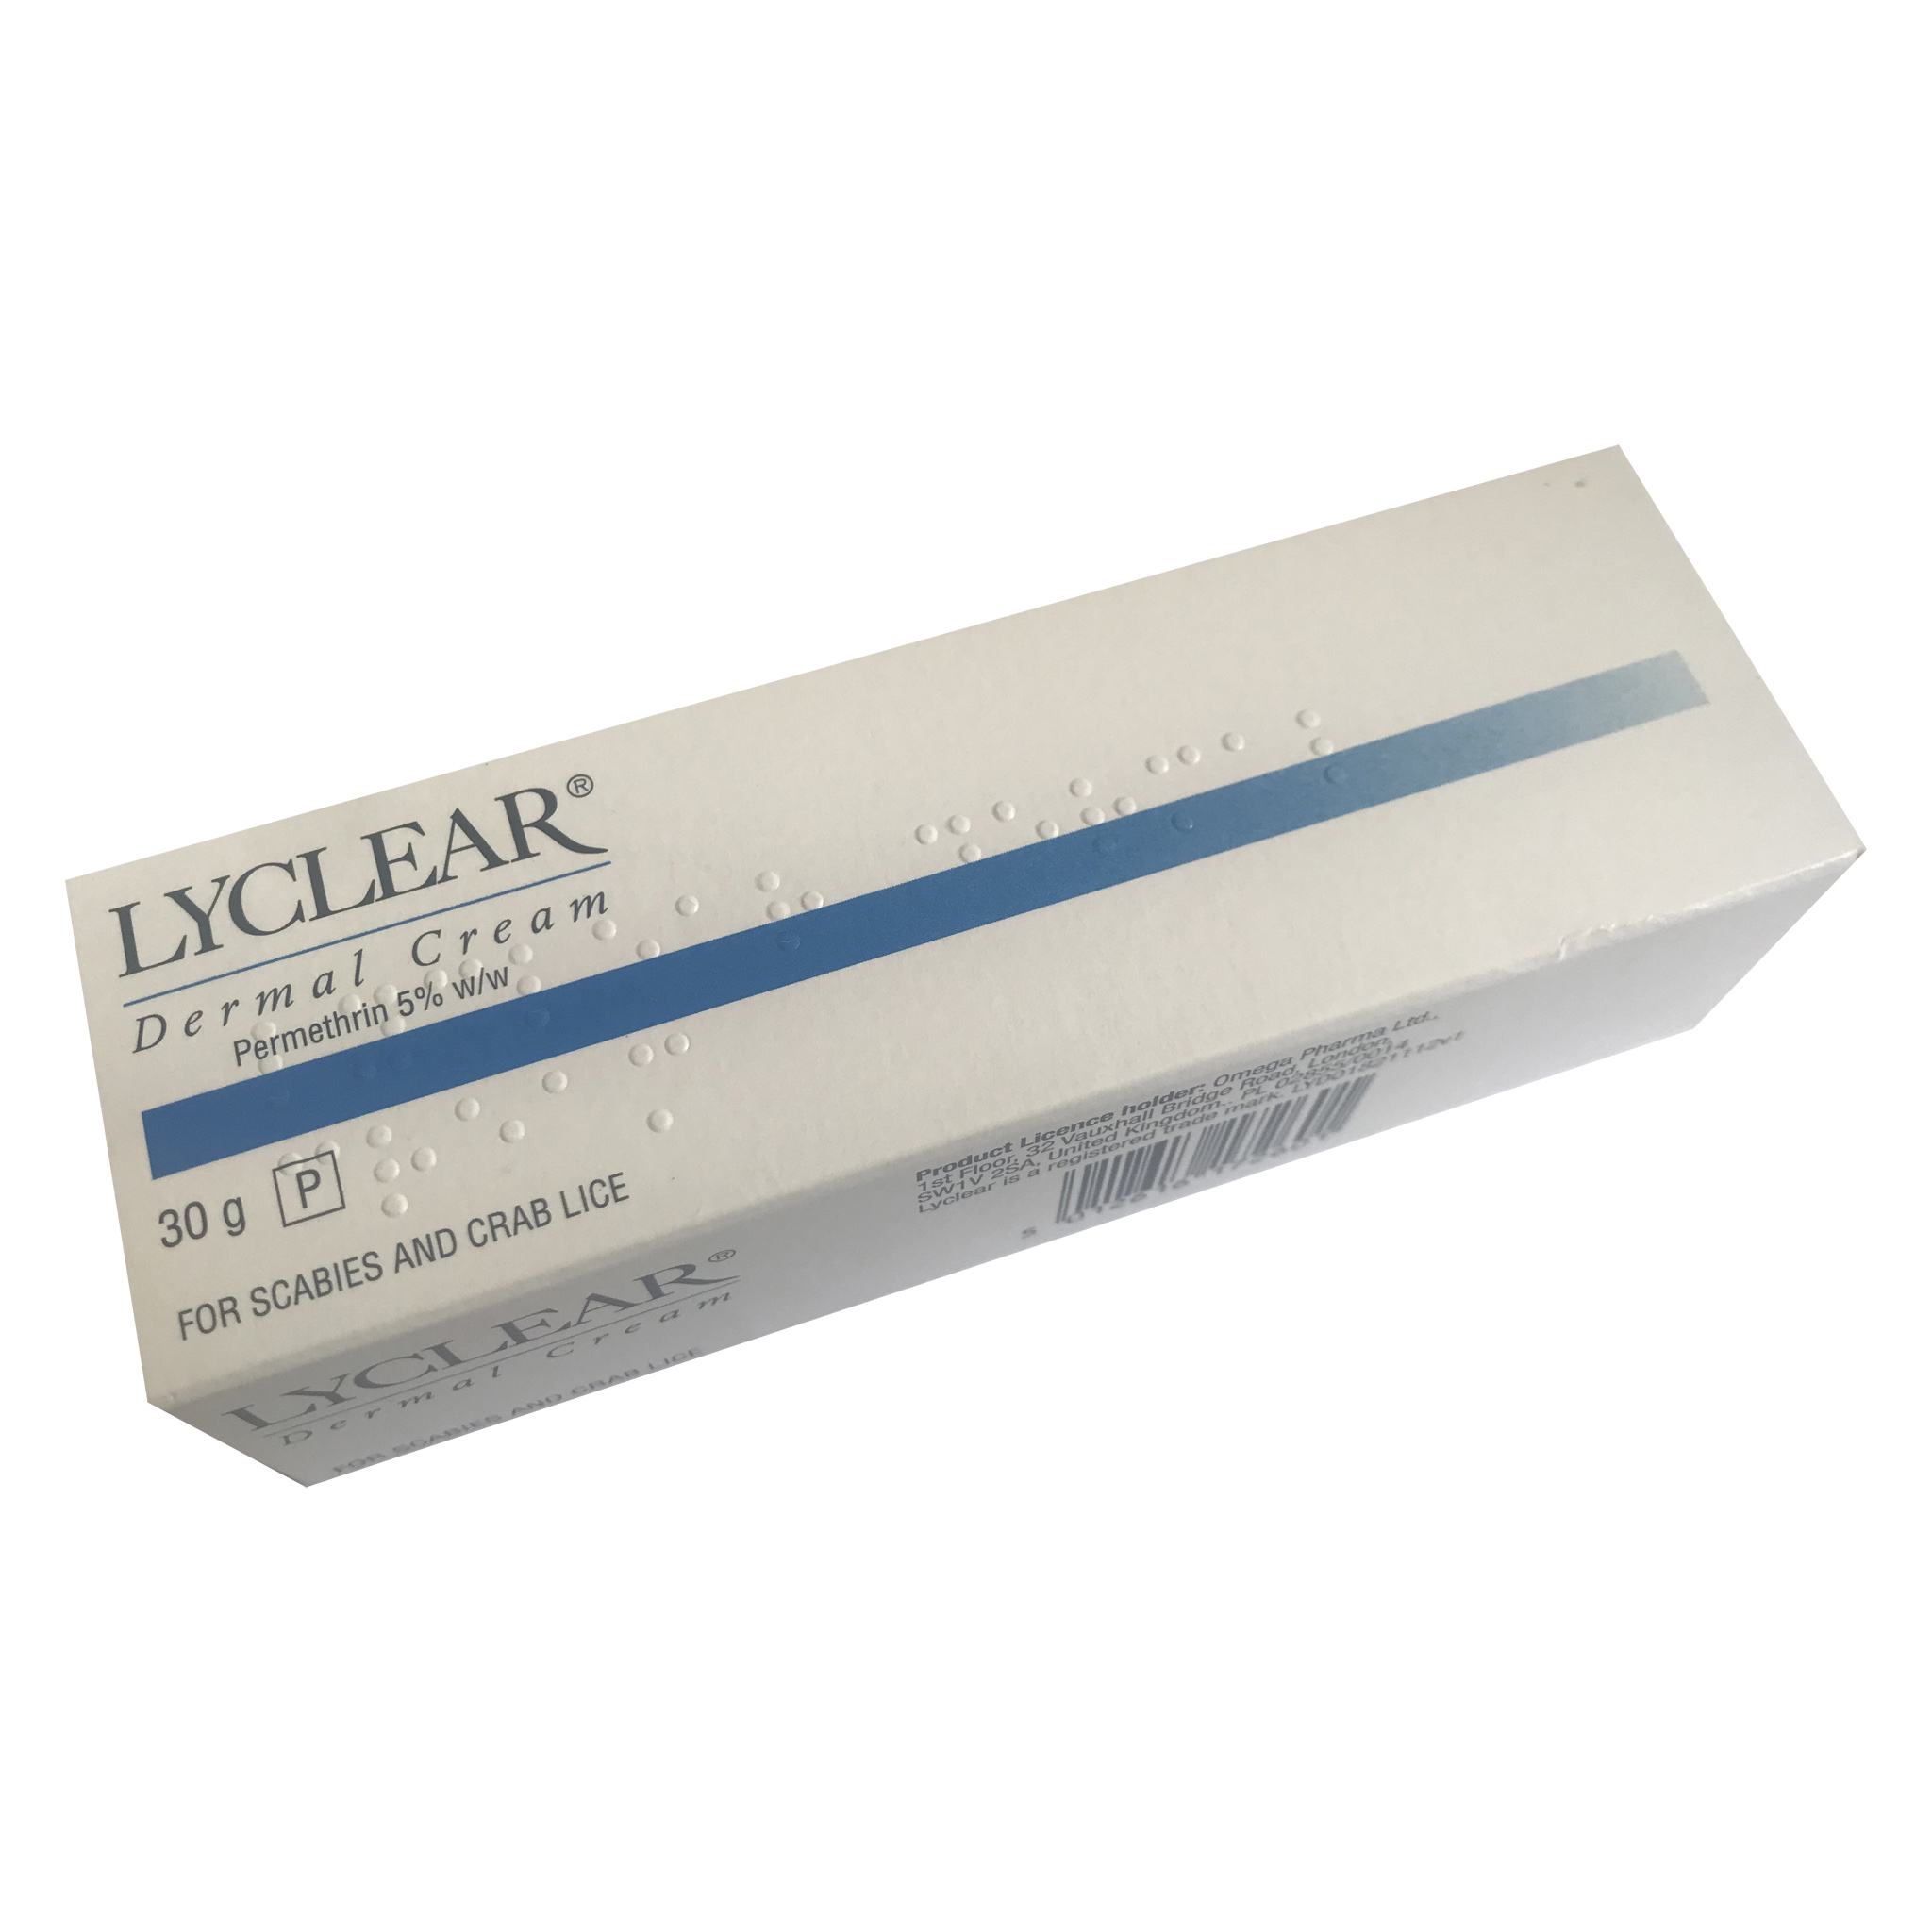 Lyclear Dermal Cream (30g) - 1 Pack